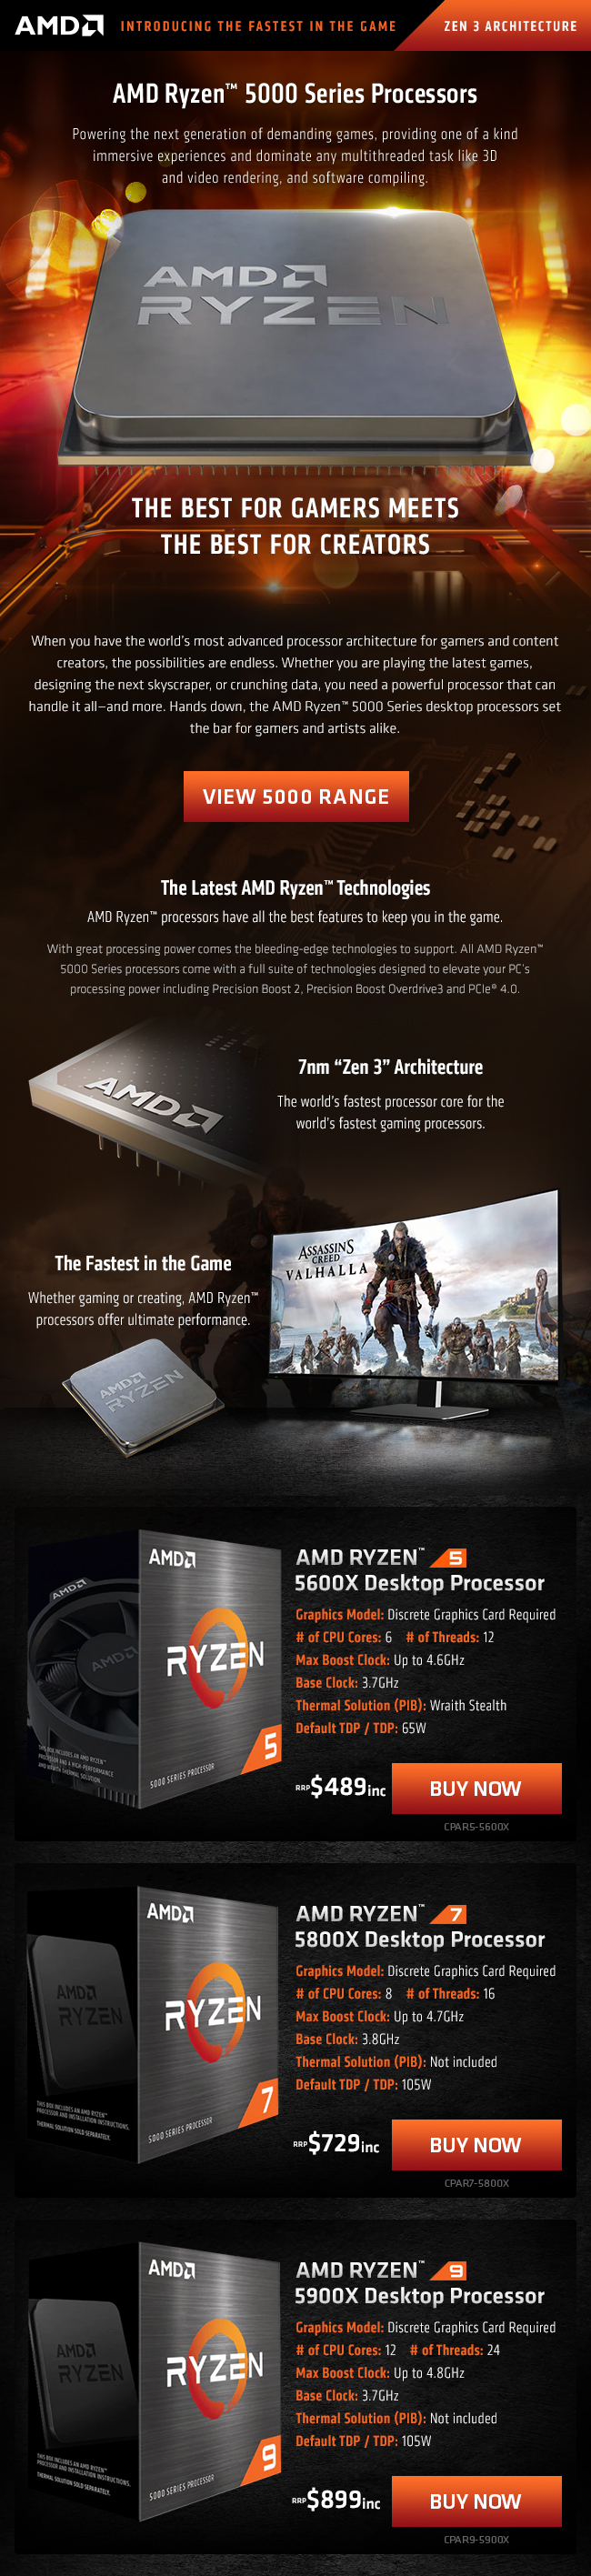 AMD Ryzen 5000 Series Processors